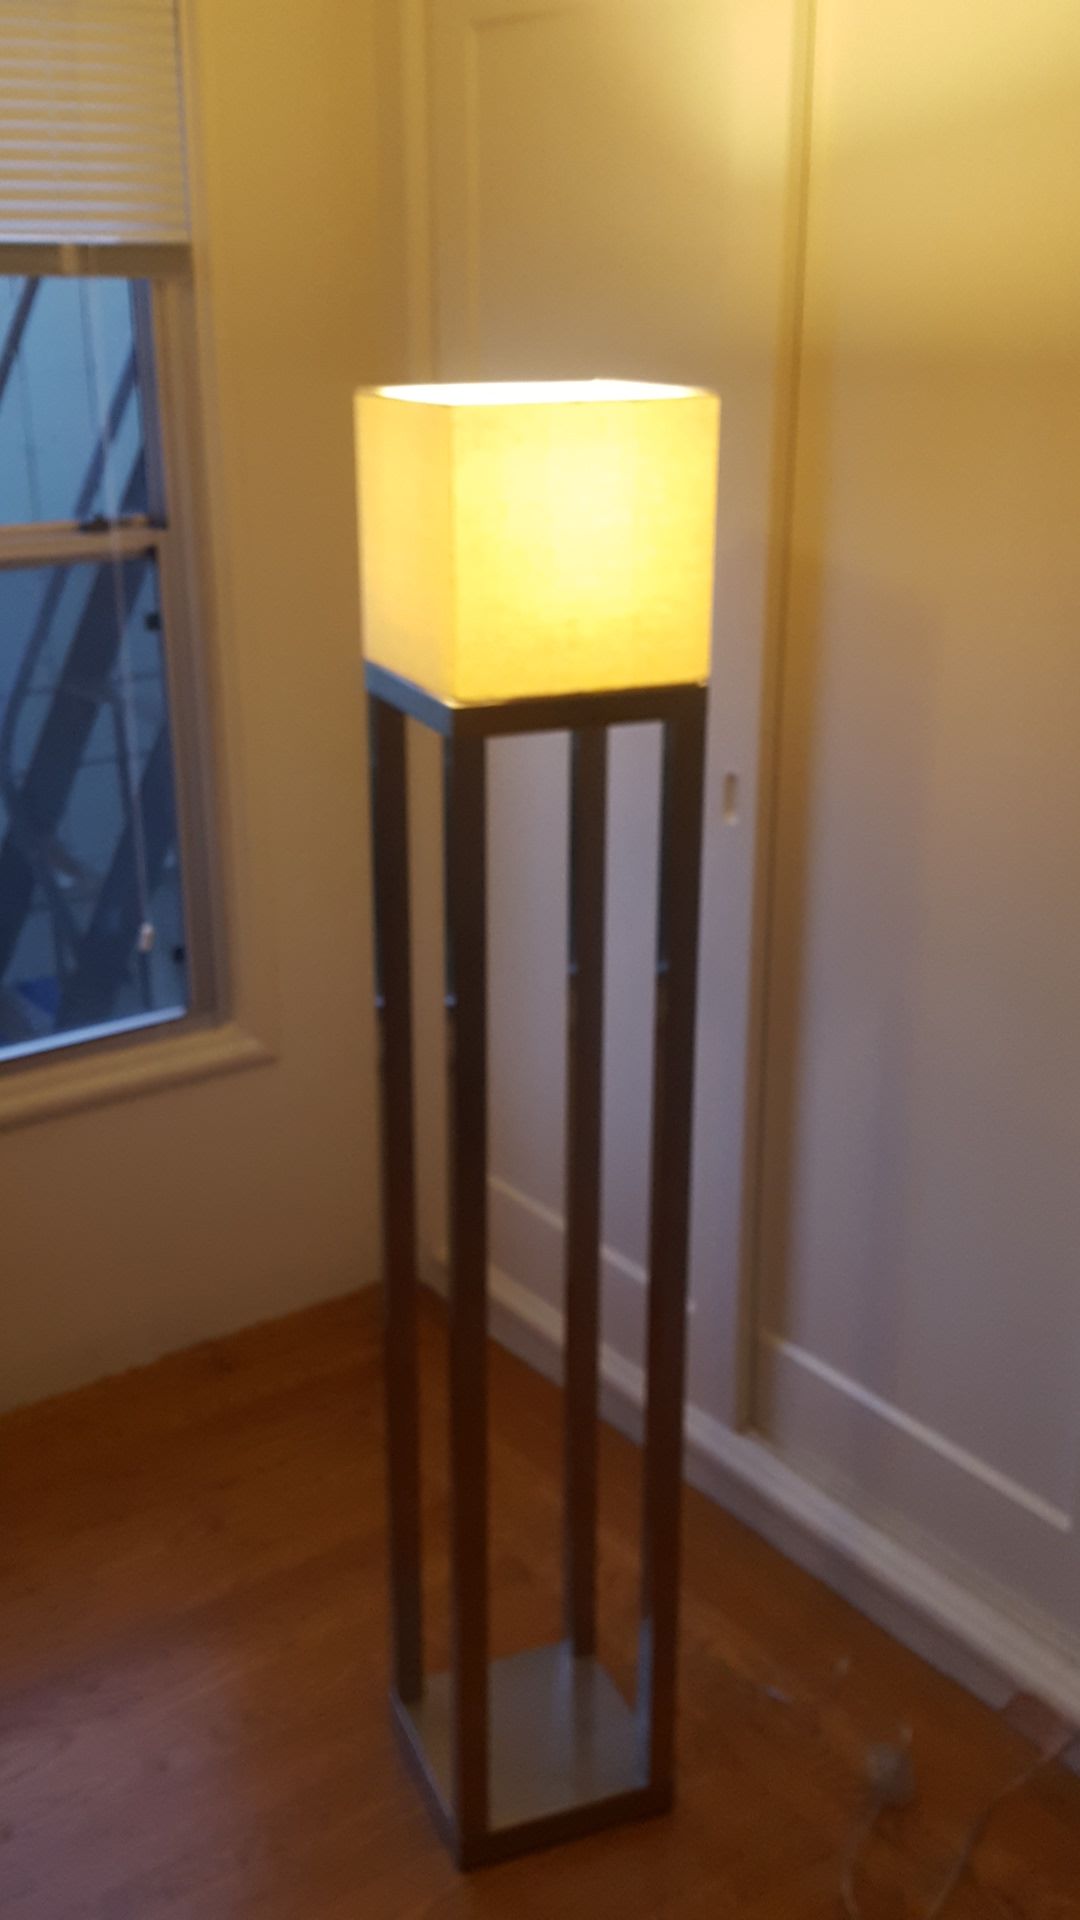 Crate and Barrel floor lamp